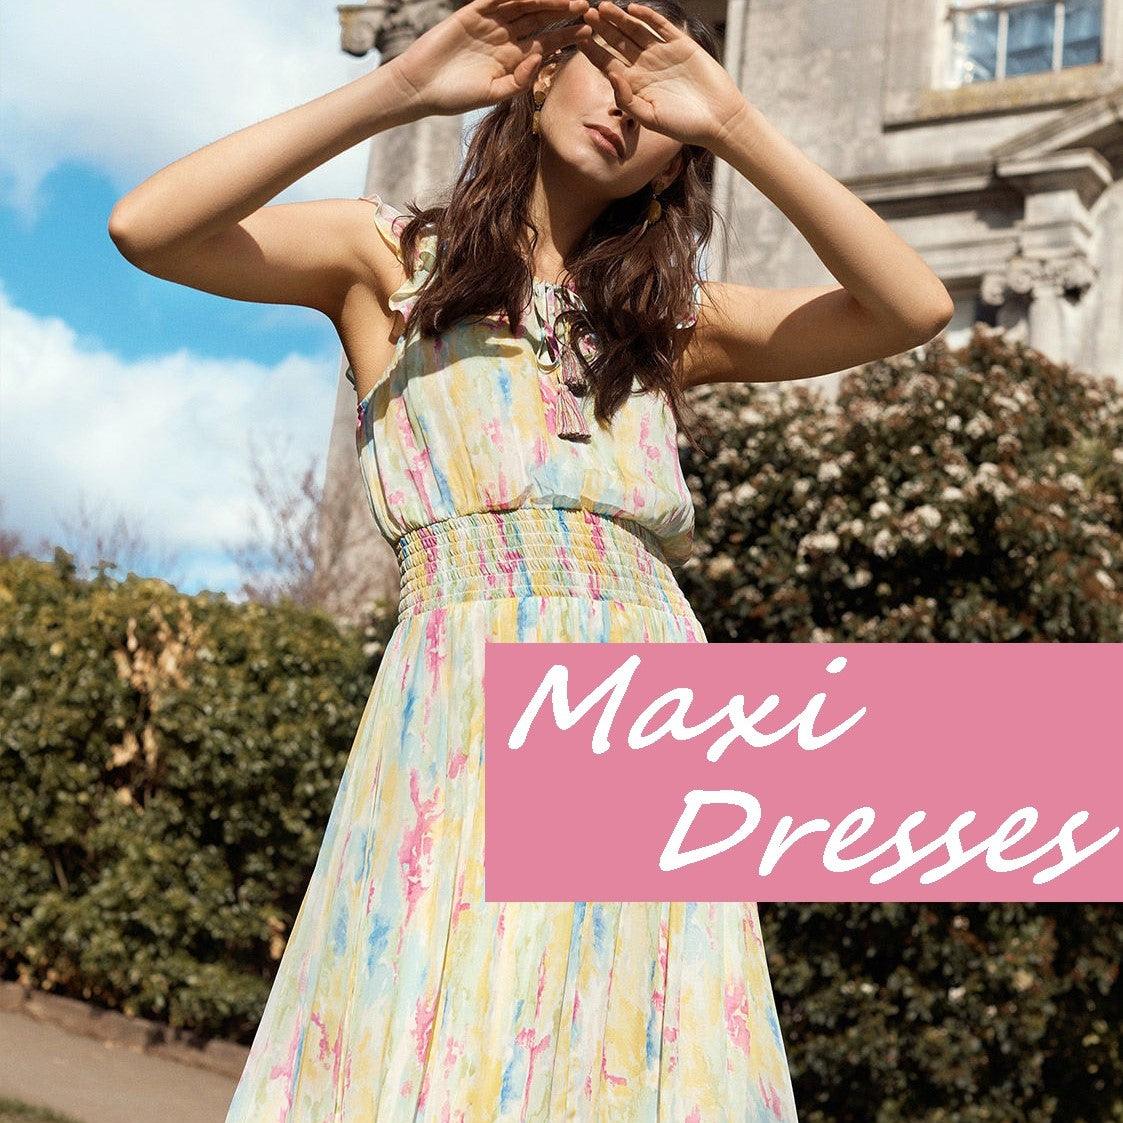 Maxi Dresses - RK Collections Boutique